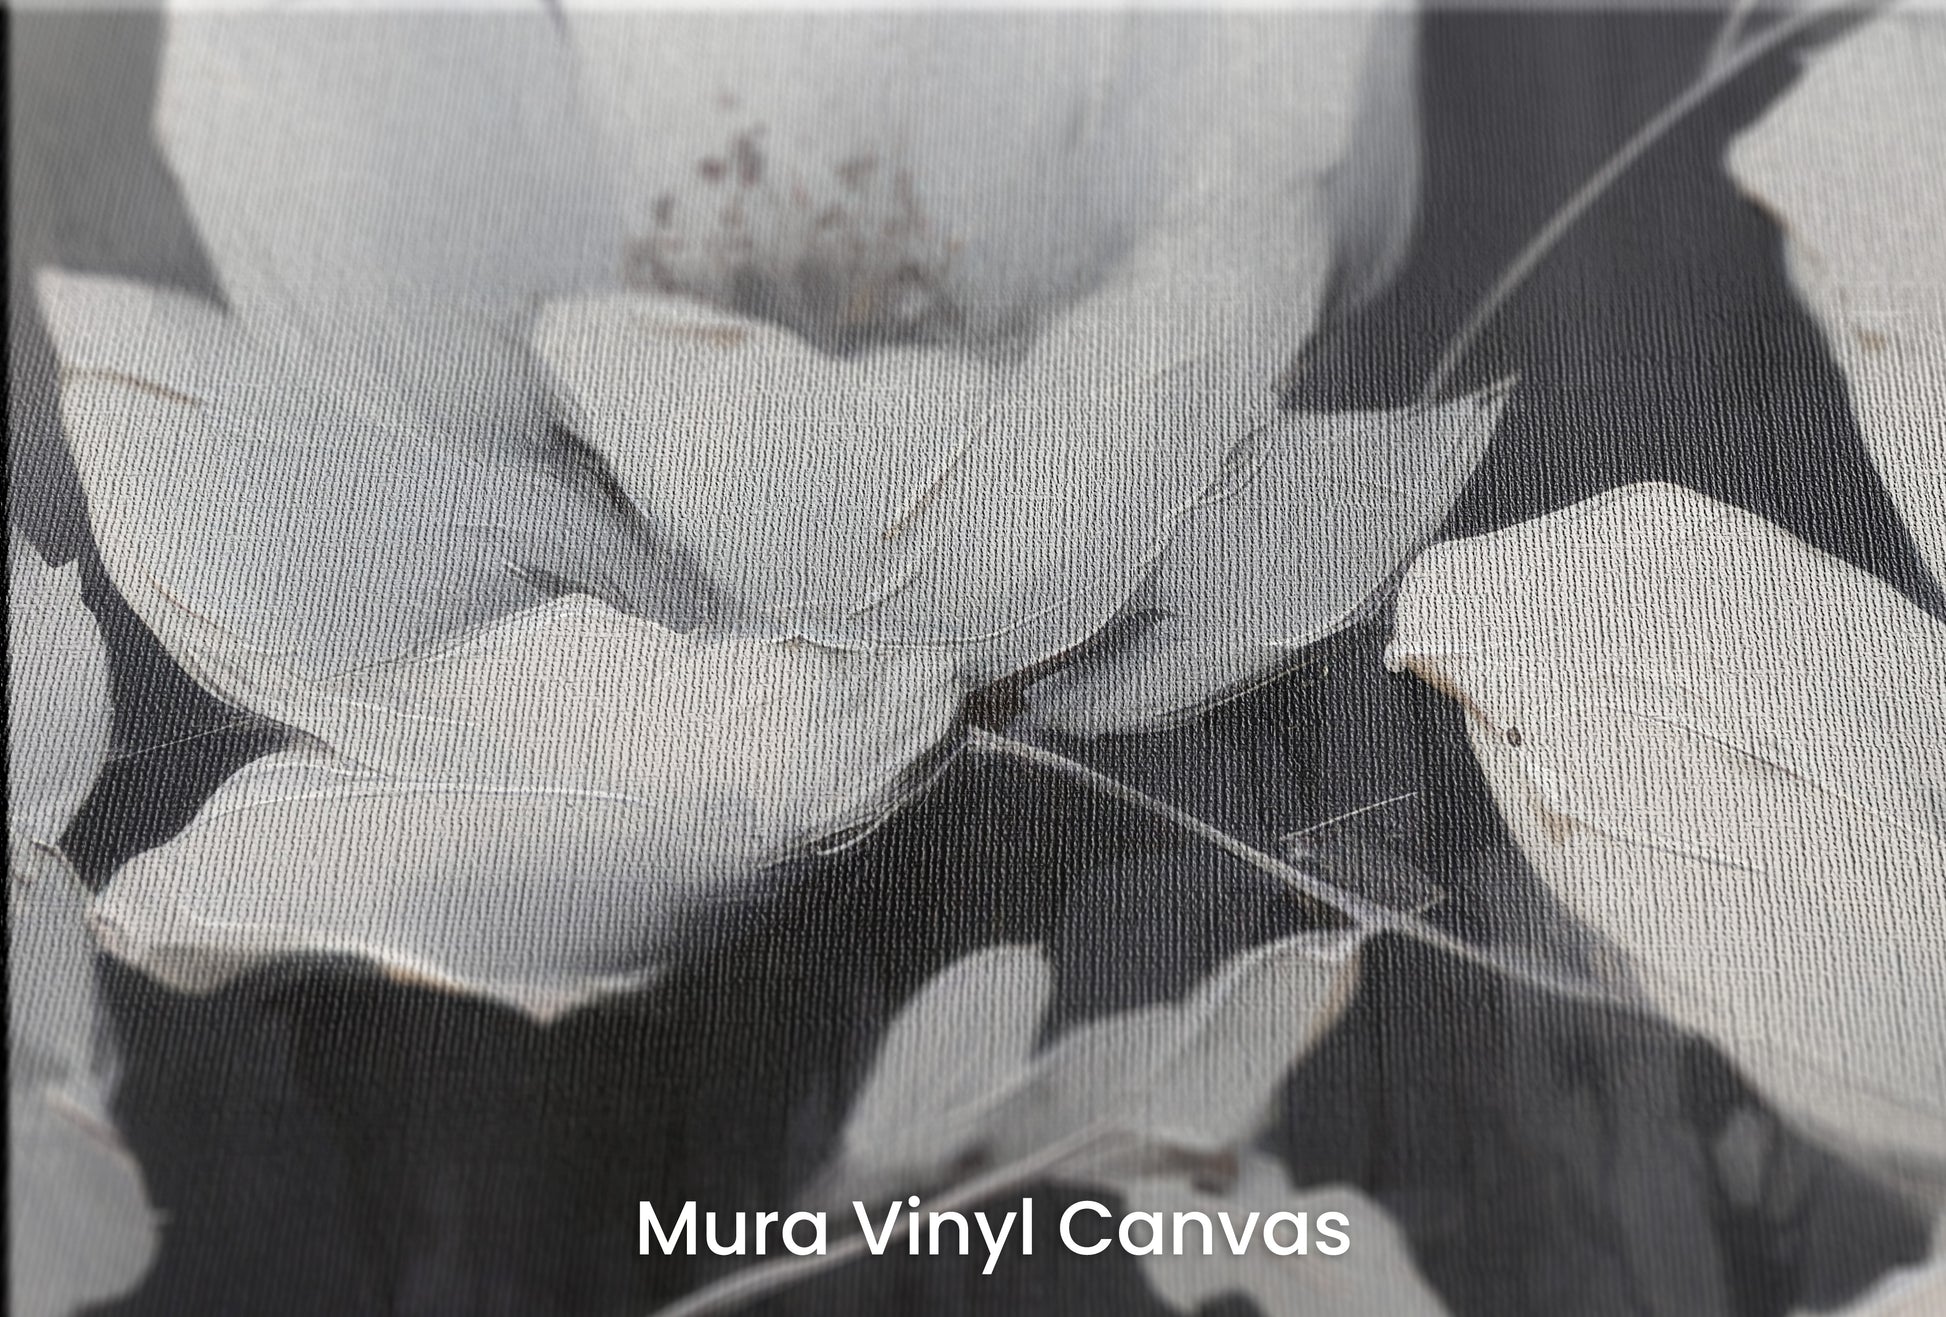 Zbliżenie na artystyczną fototapetę o nazwie MOONLIGHT SERENADE BLOSSOMS na podłożu Mura Vinyl Canvas - faktura naturalnego płótna.